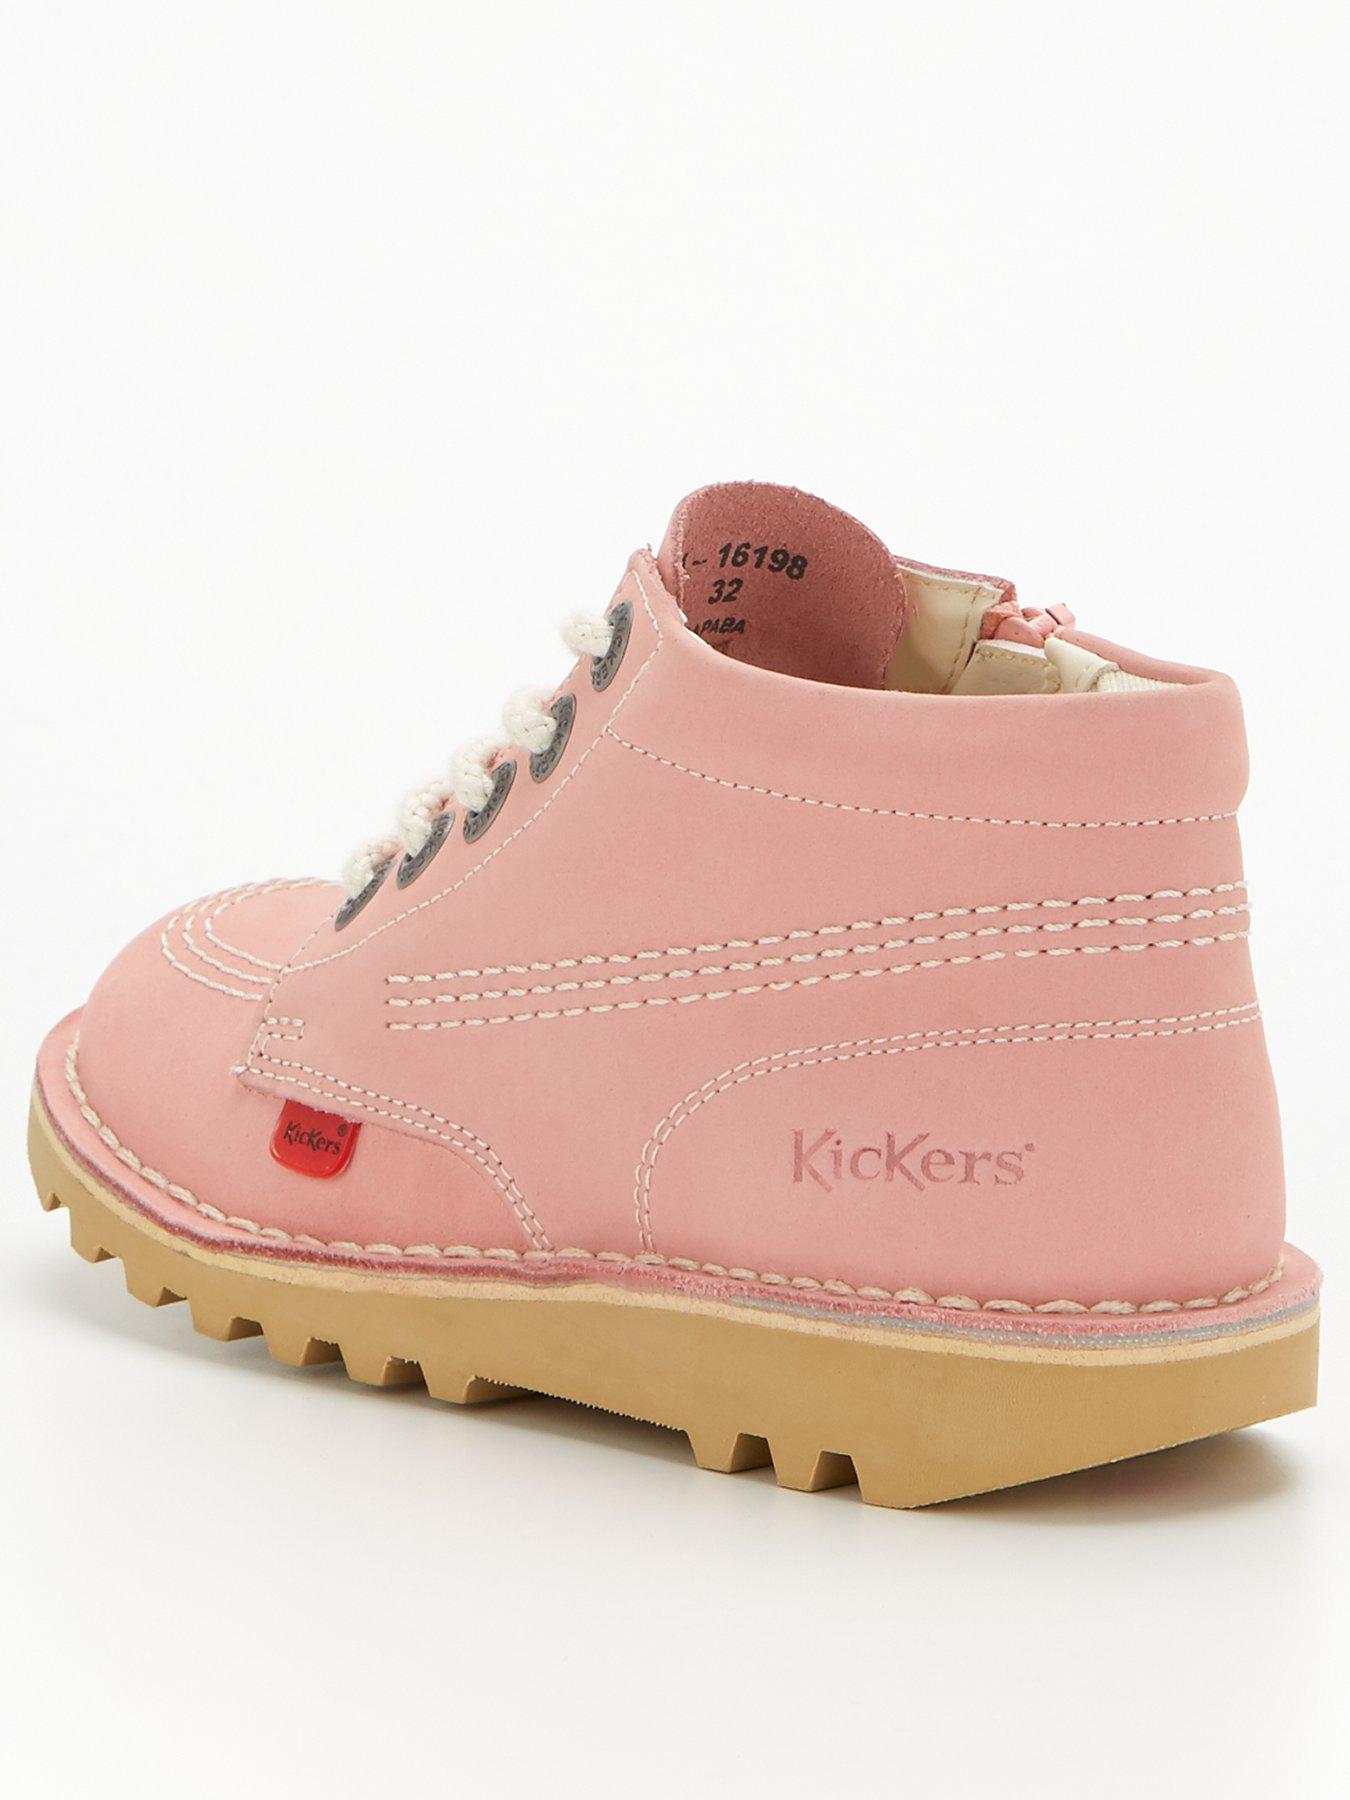 Kids Kick Hi Boot - Pink